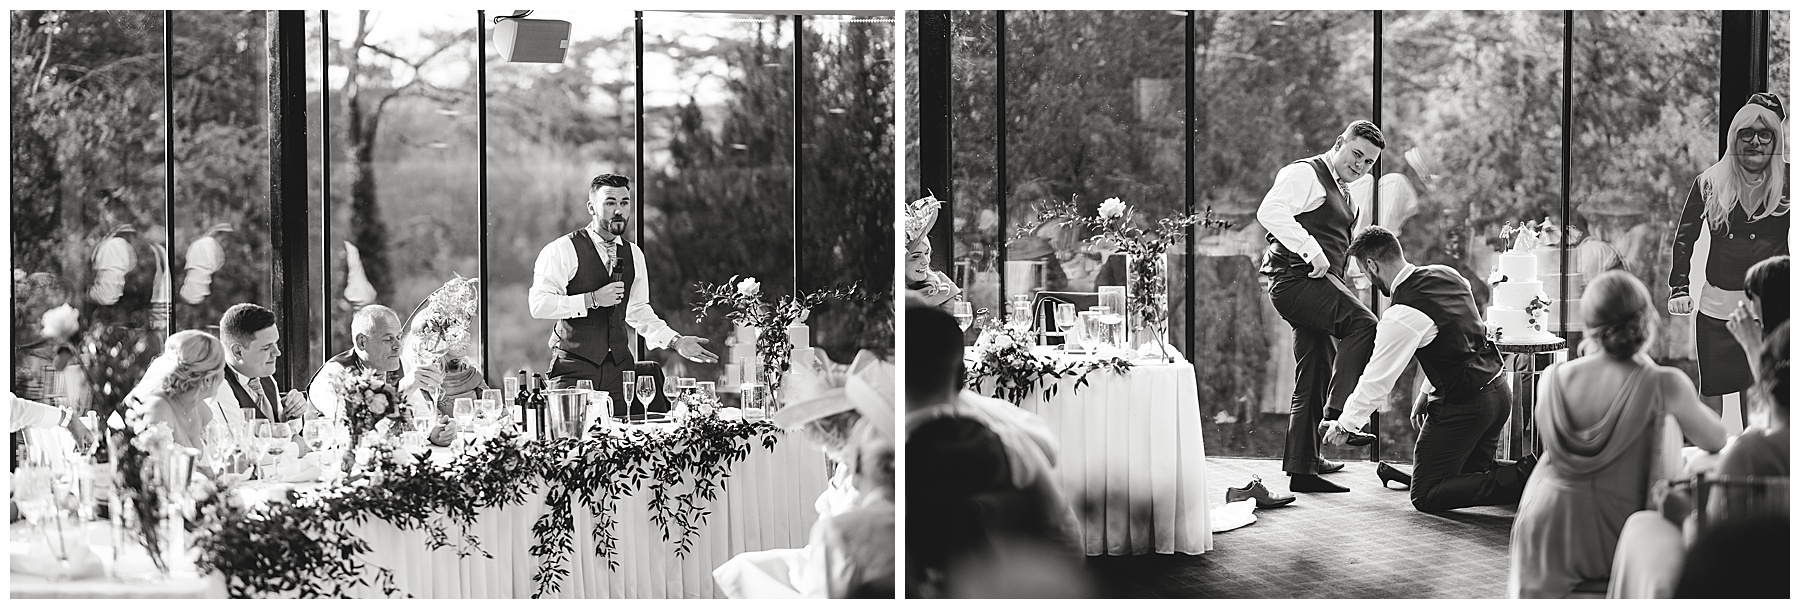 Wedding Speeches at Fairyhill